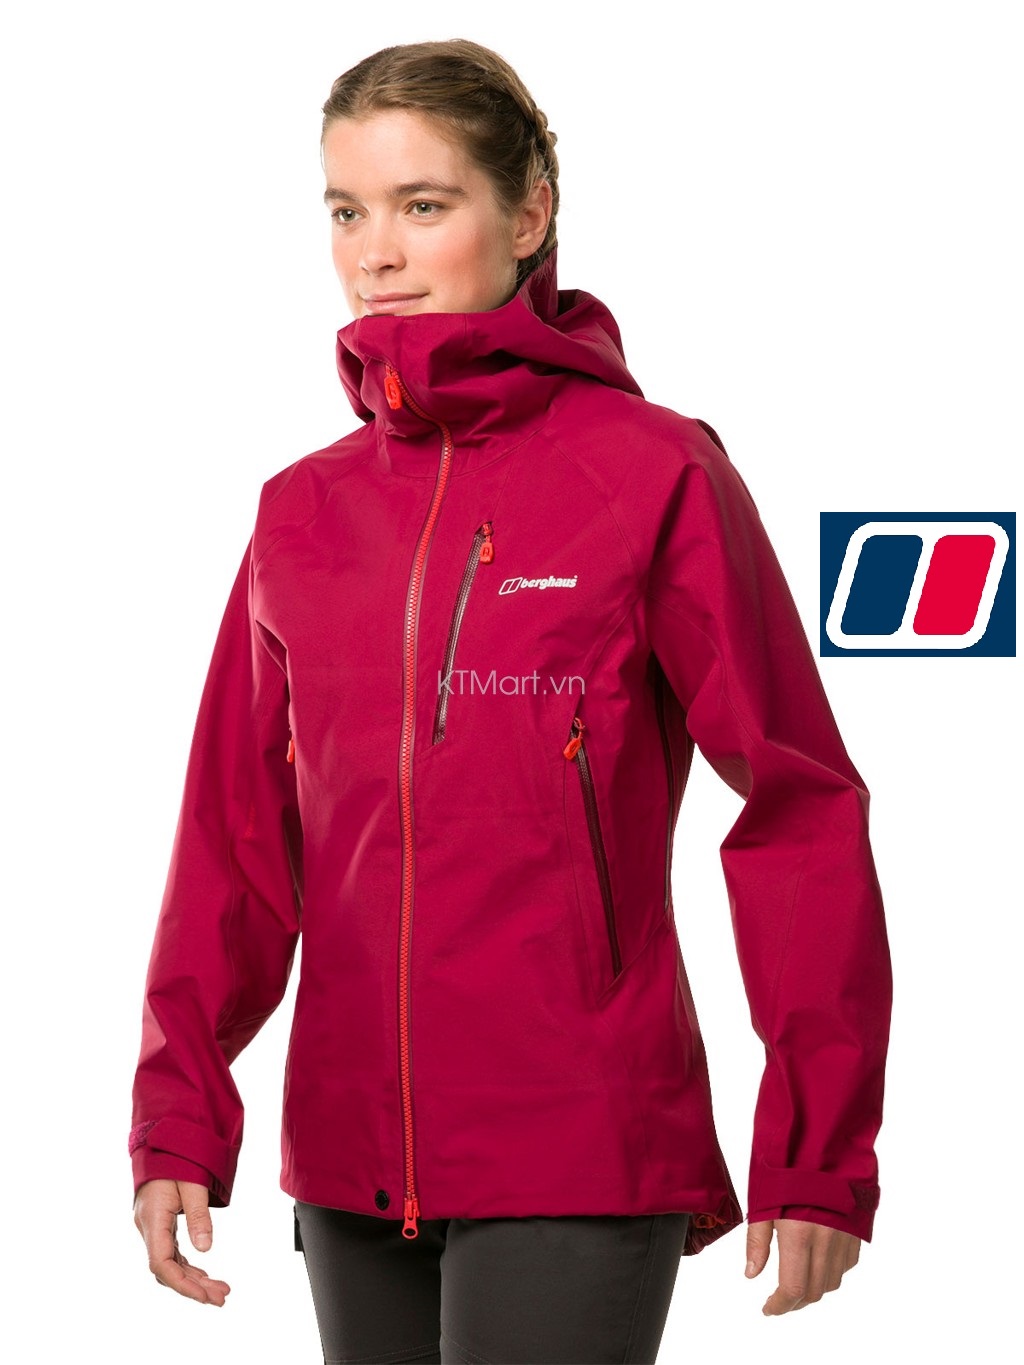 Berghaus Women’s Extrem 5000 Vented Waterproof GORETEX Jacket 422313 Berghaus size S US